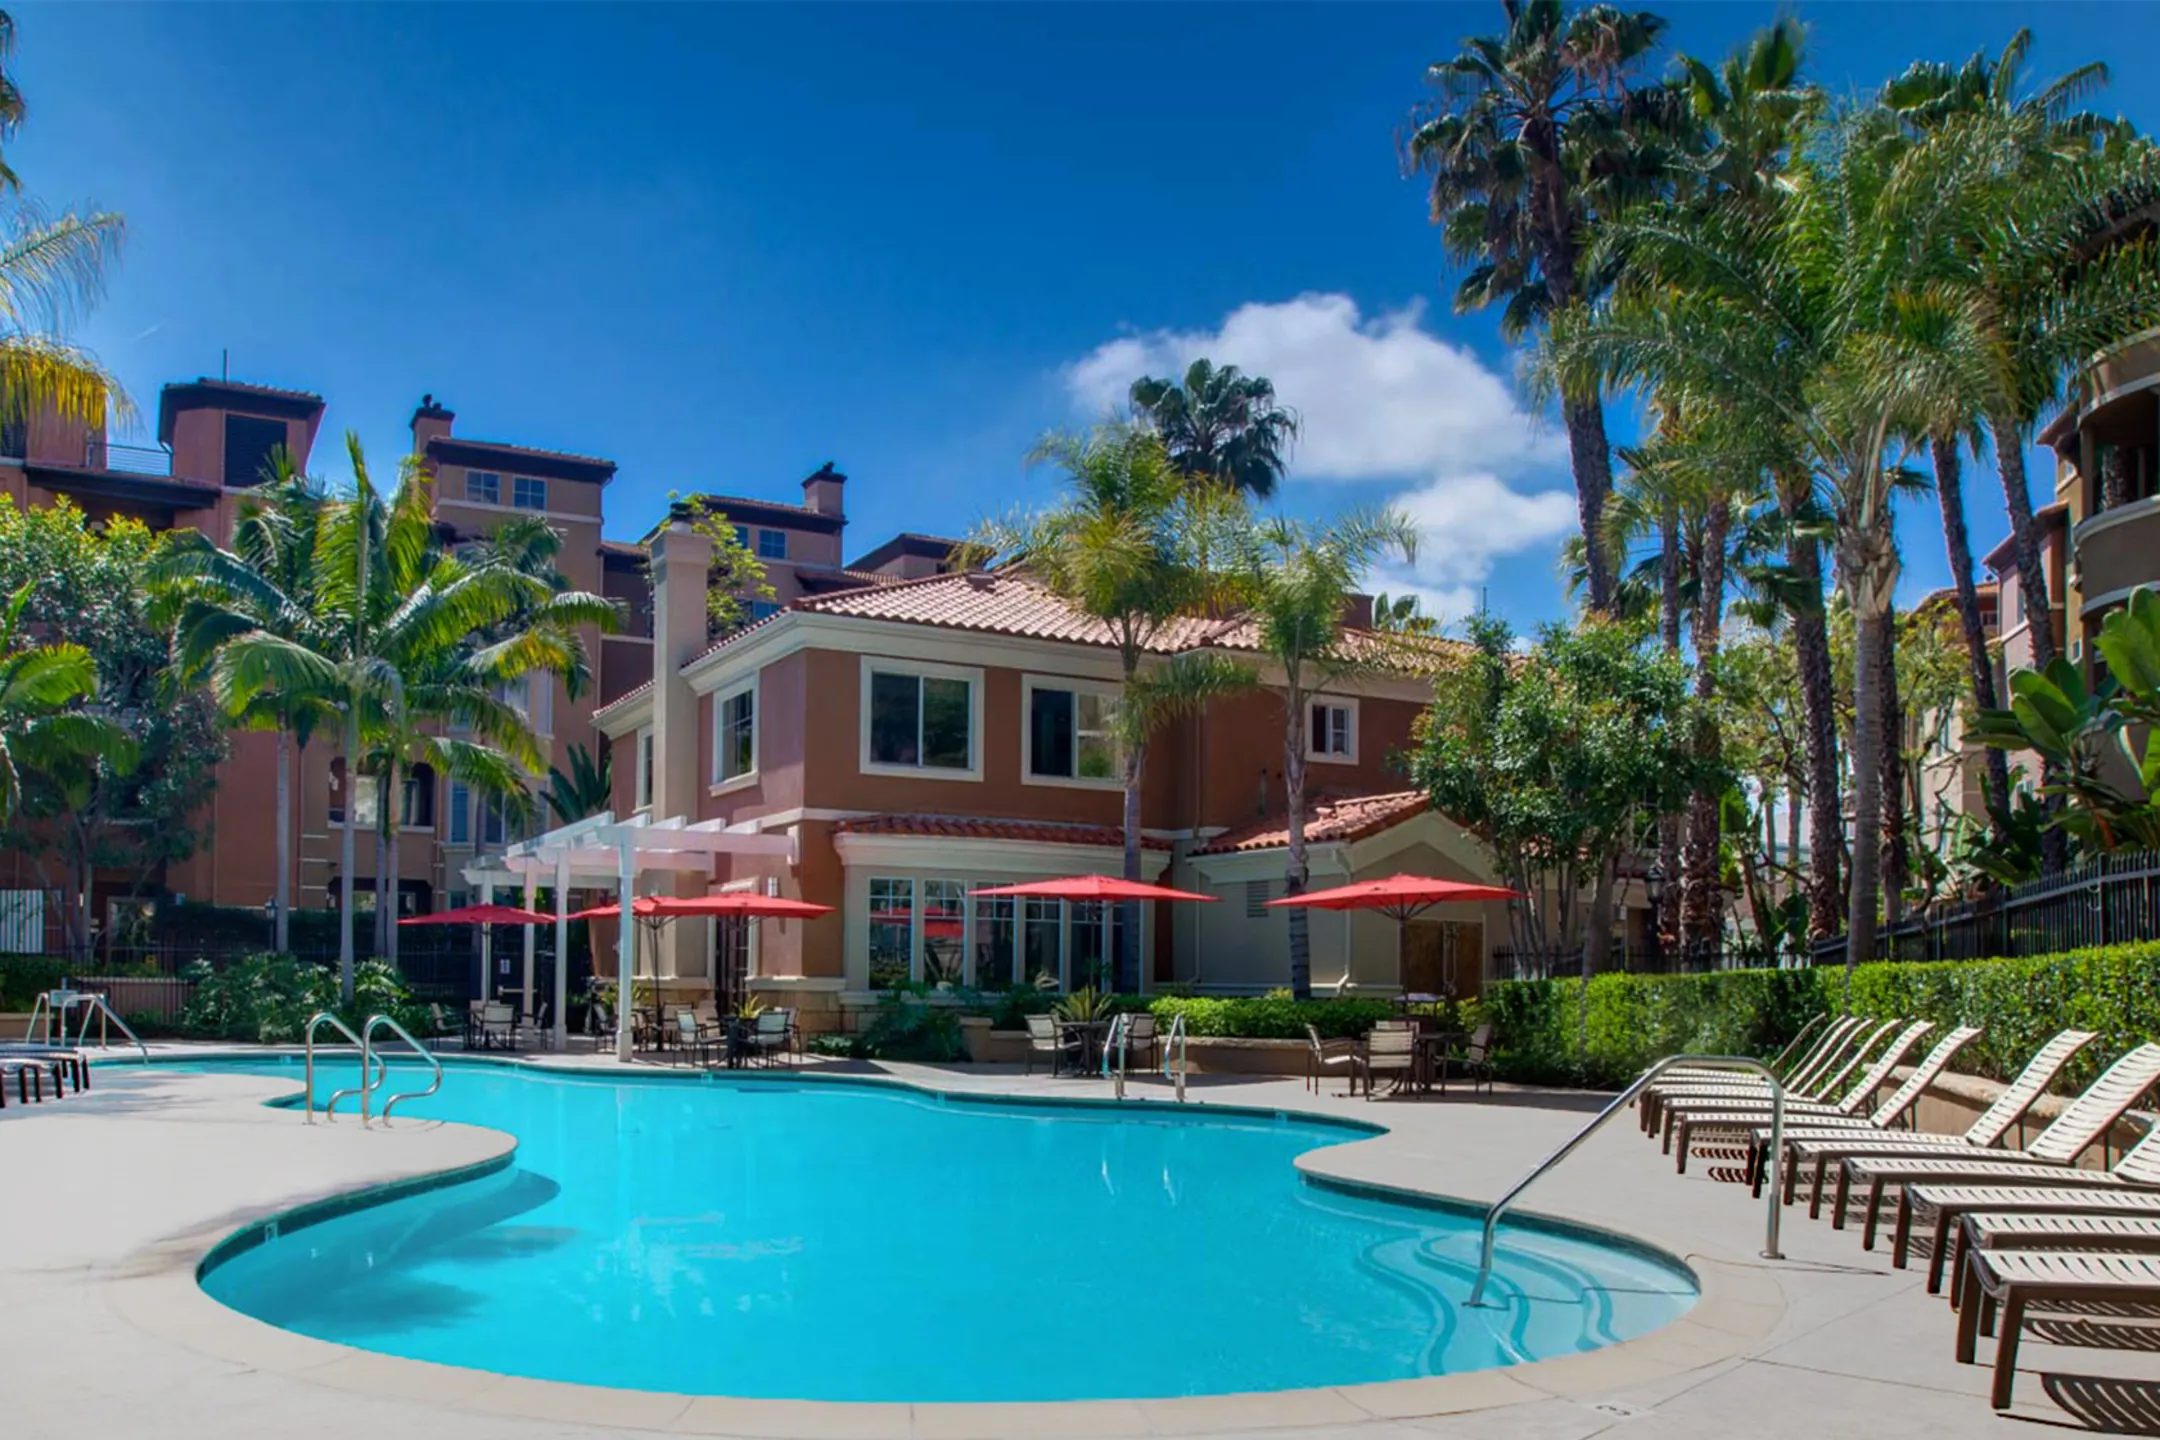 Villas at Park La Brea Apartments Apartments - Los Angeles, CA 90036